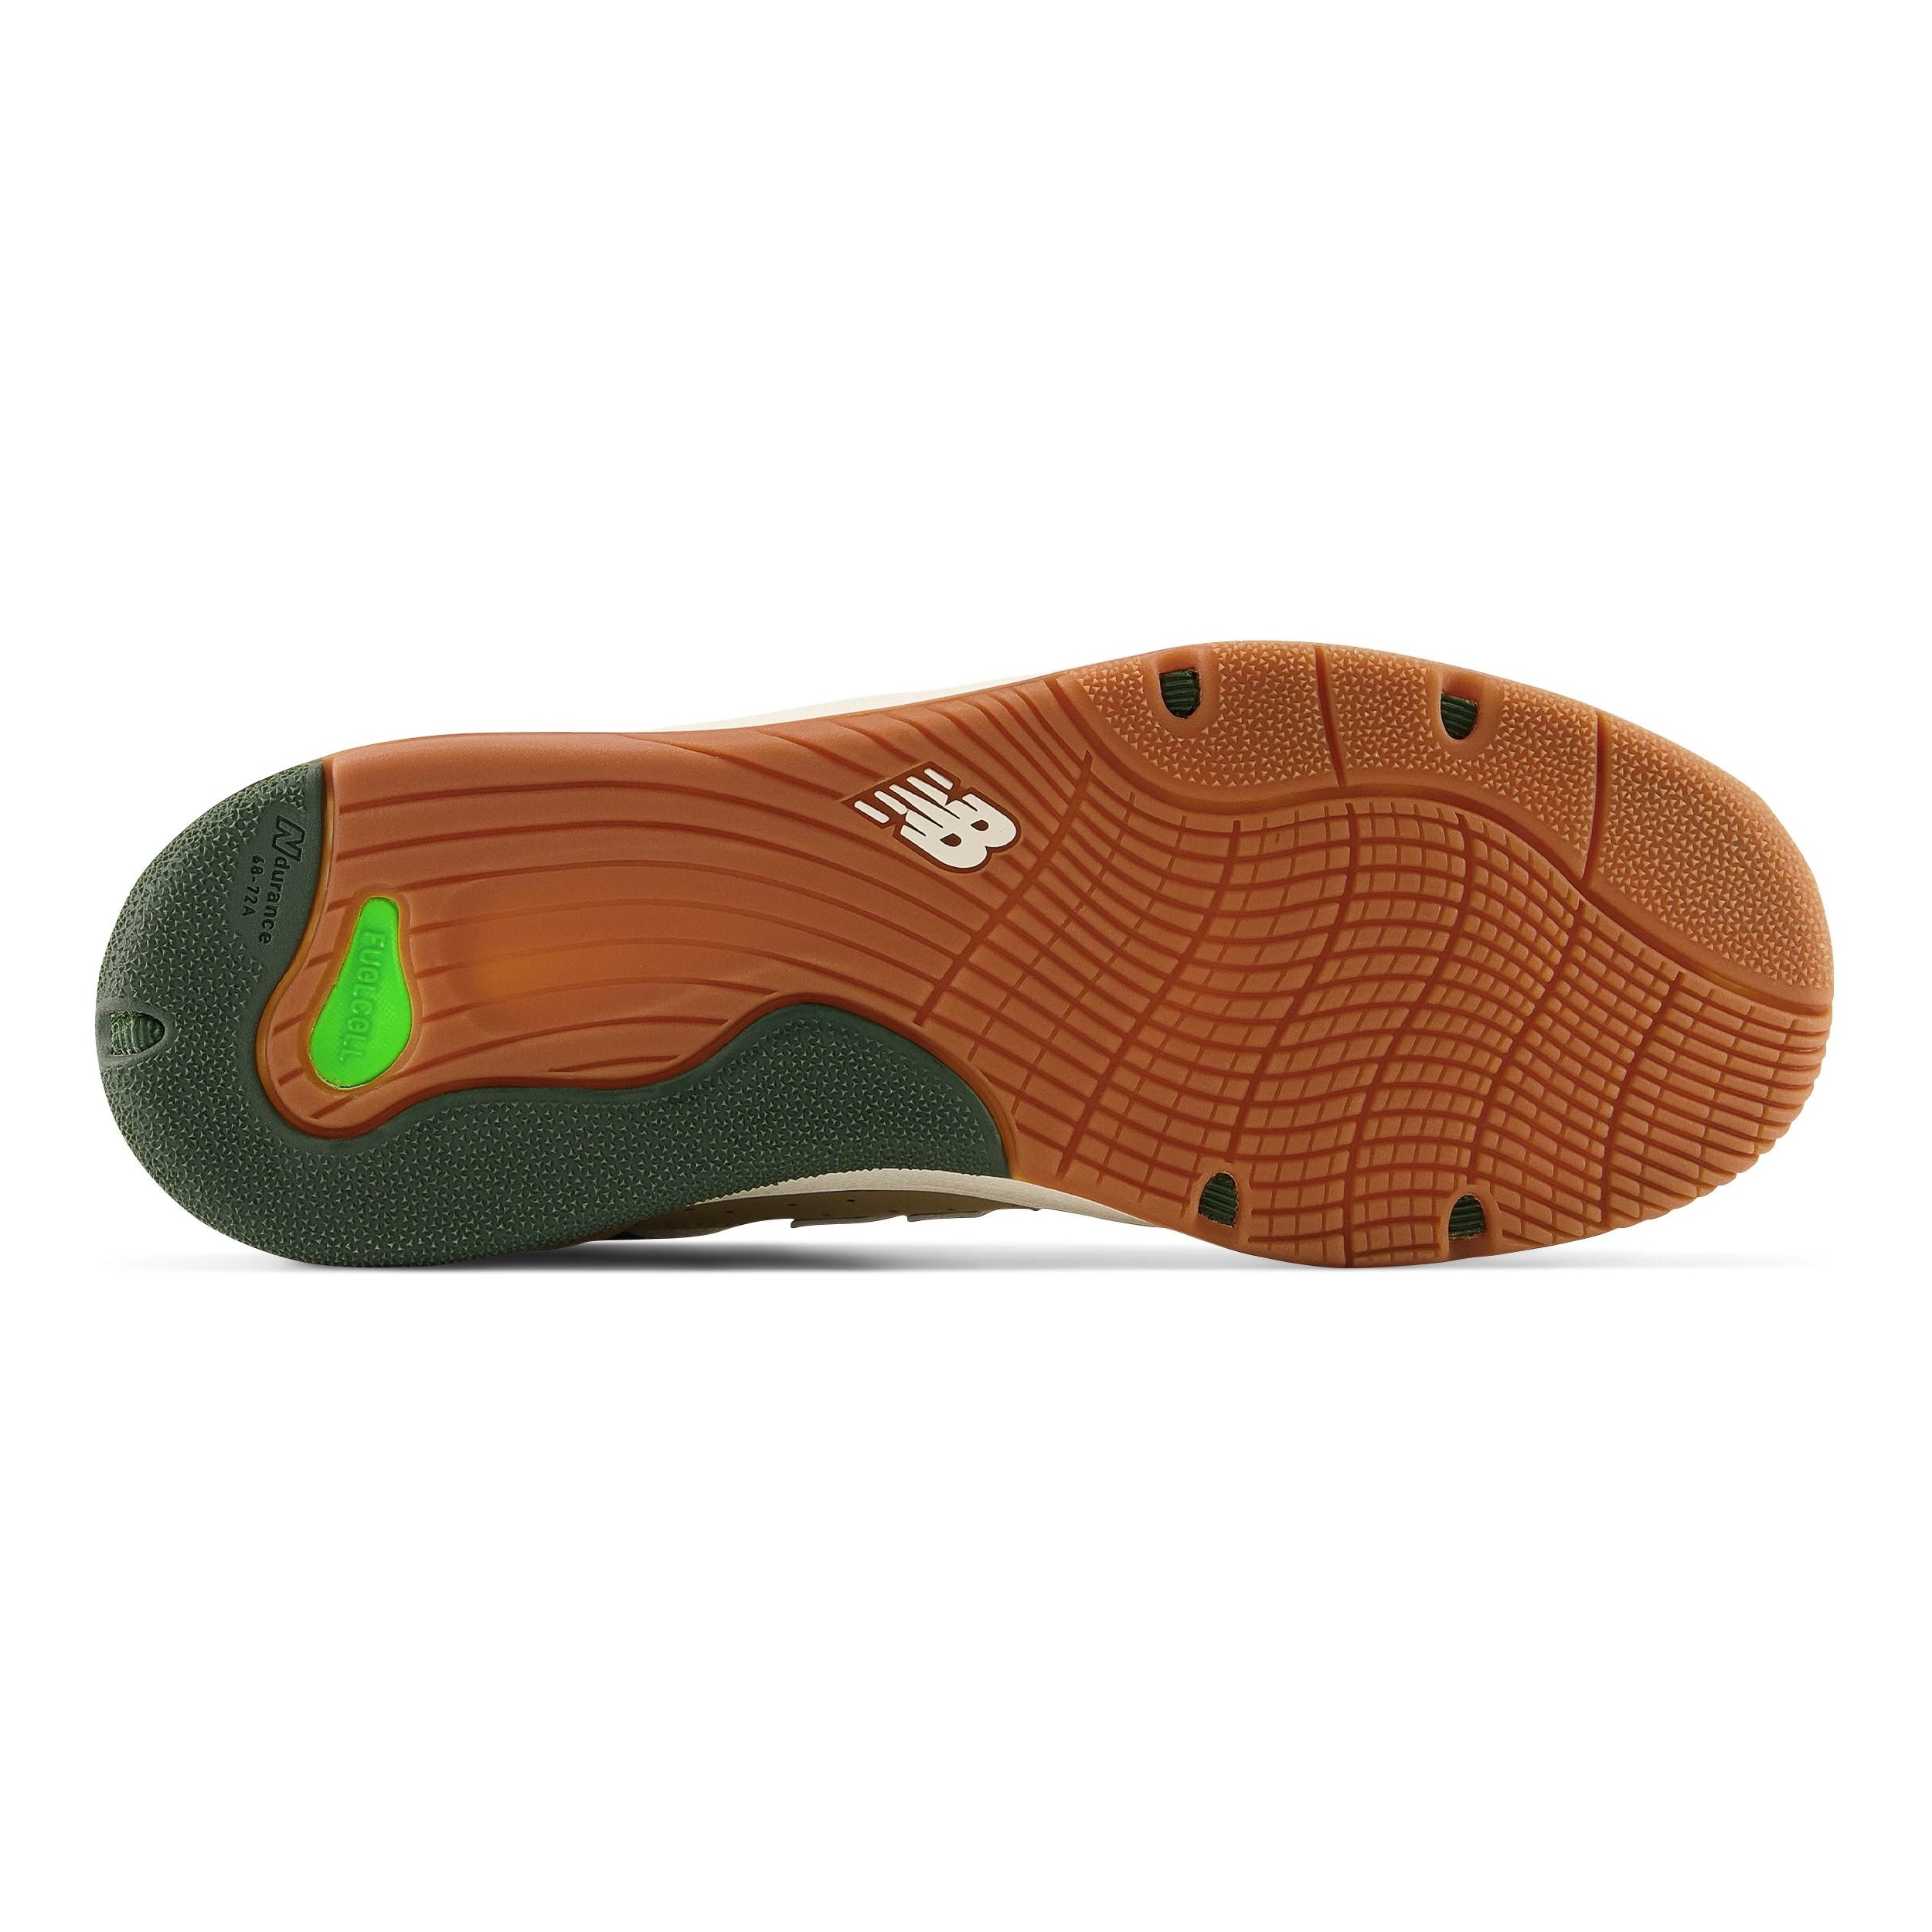 Tan/Green NM1010 NB Numeric Tiago Skate Shoe Bottom